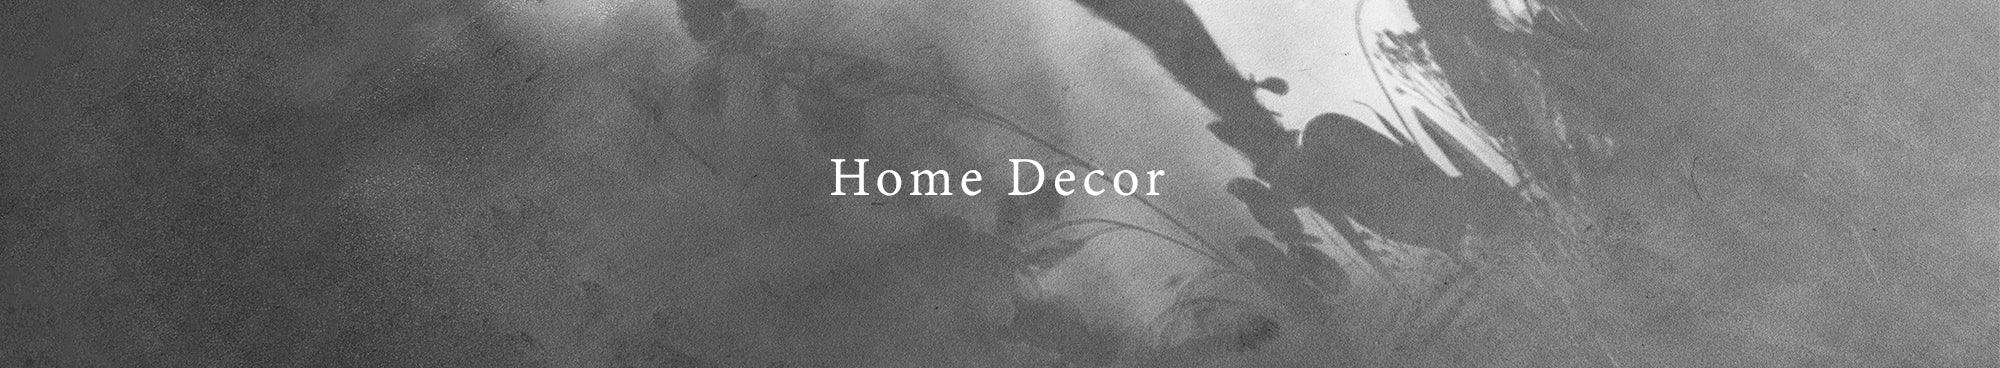 Home Decor - Rikumo